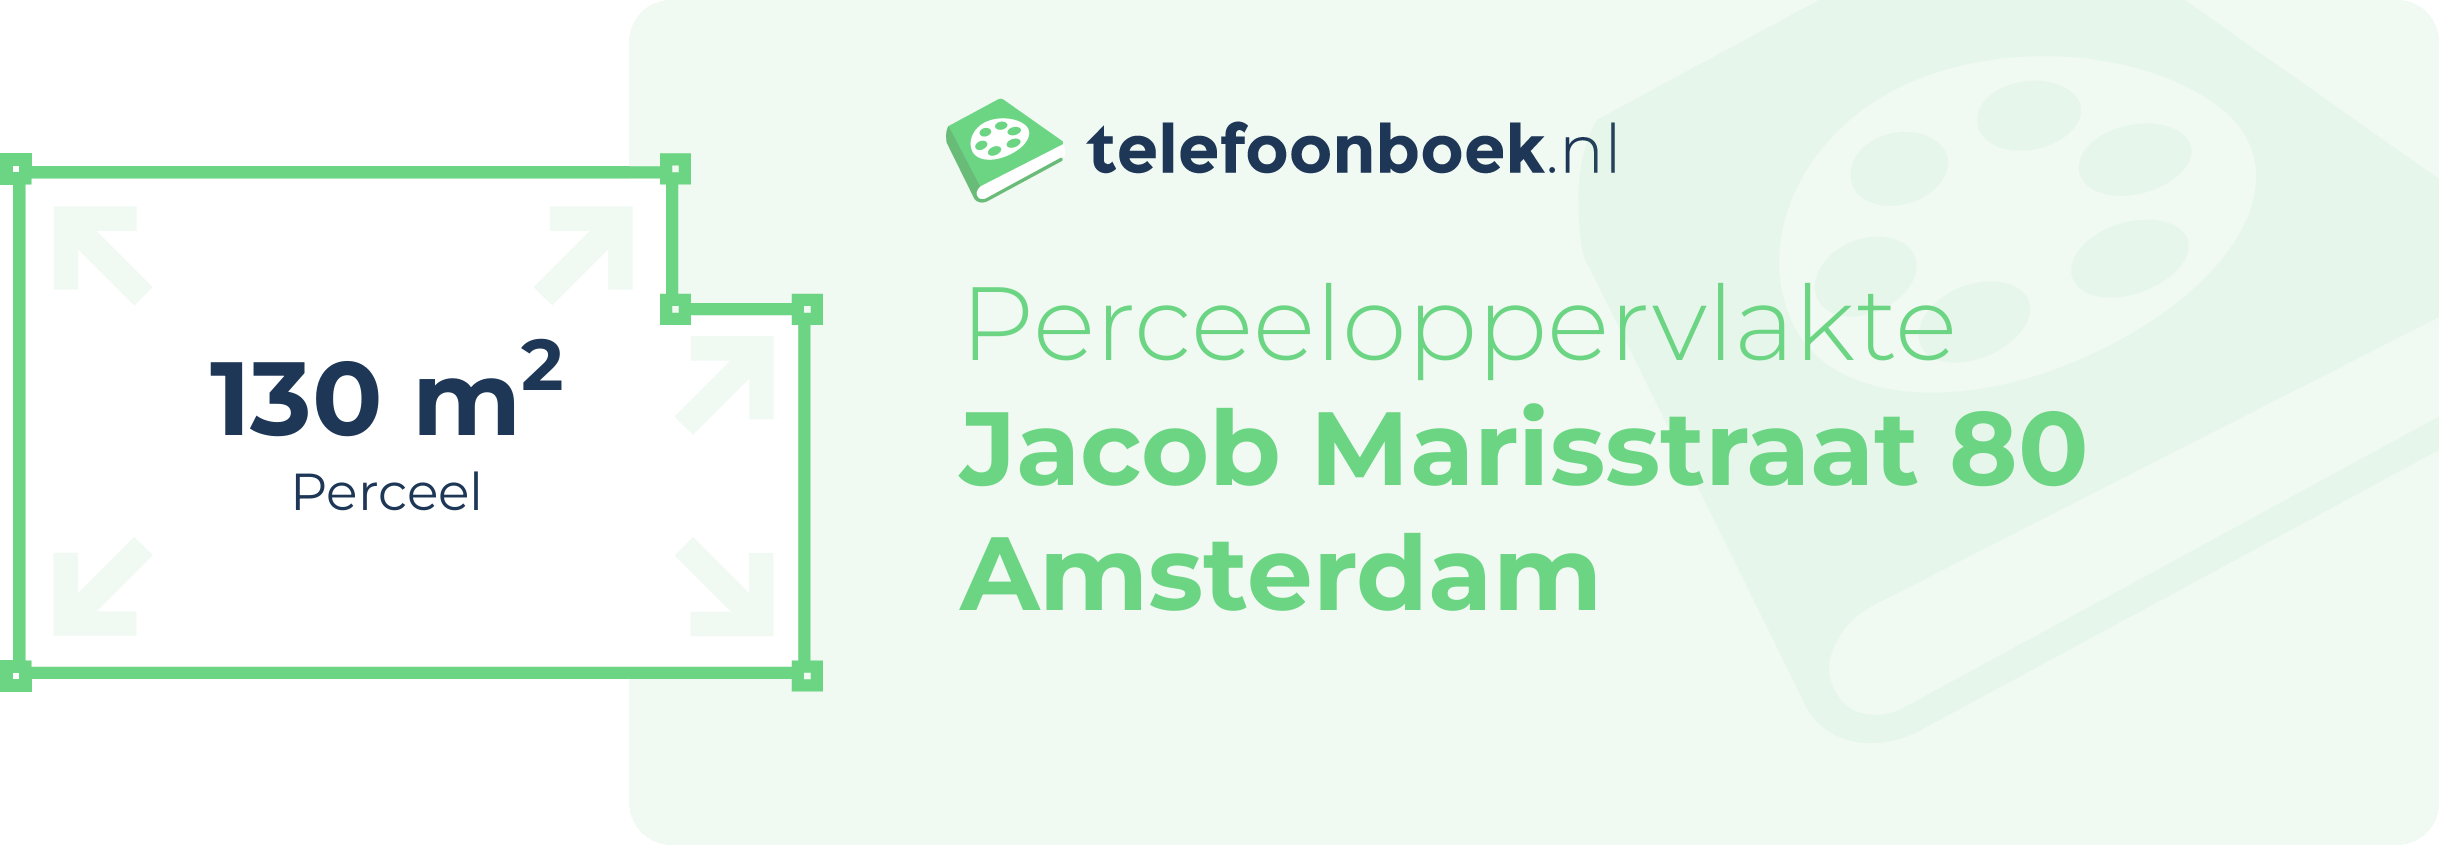 Perceeloppervlakte Jacob Marisstraat 80 Amsterdam